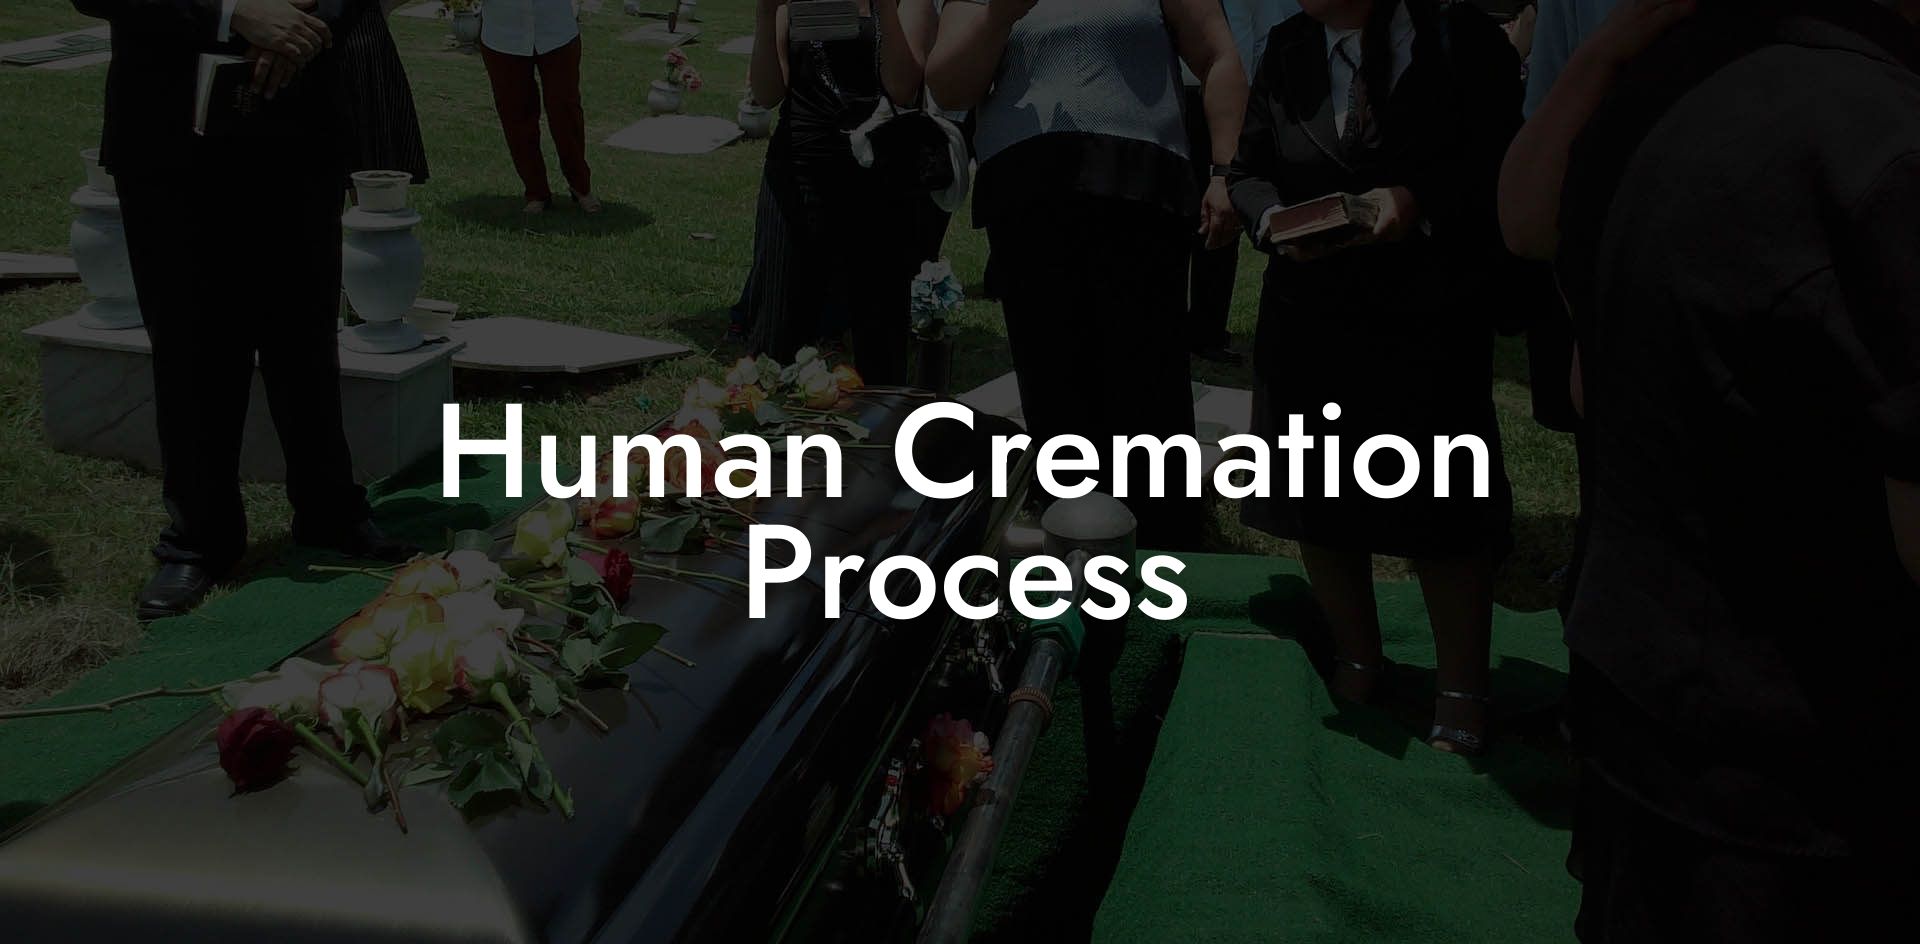 Human Cremation Process